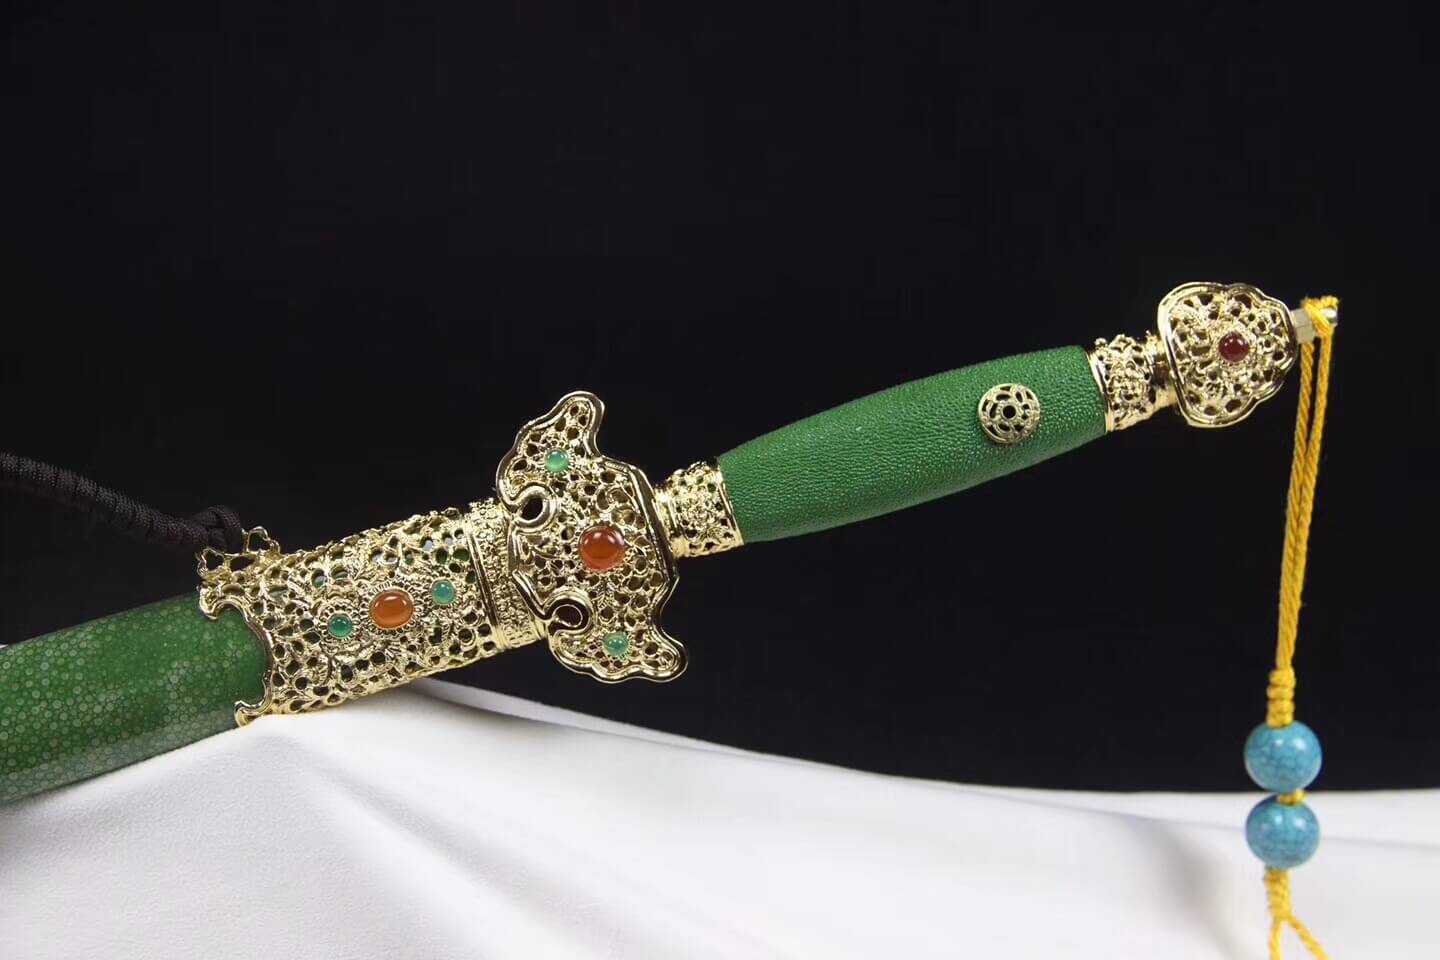 Longquan sword,Folded steel,Green skin scabbard,Brass fitting,Full tang - Chinese sword shop